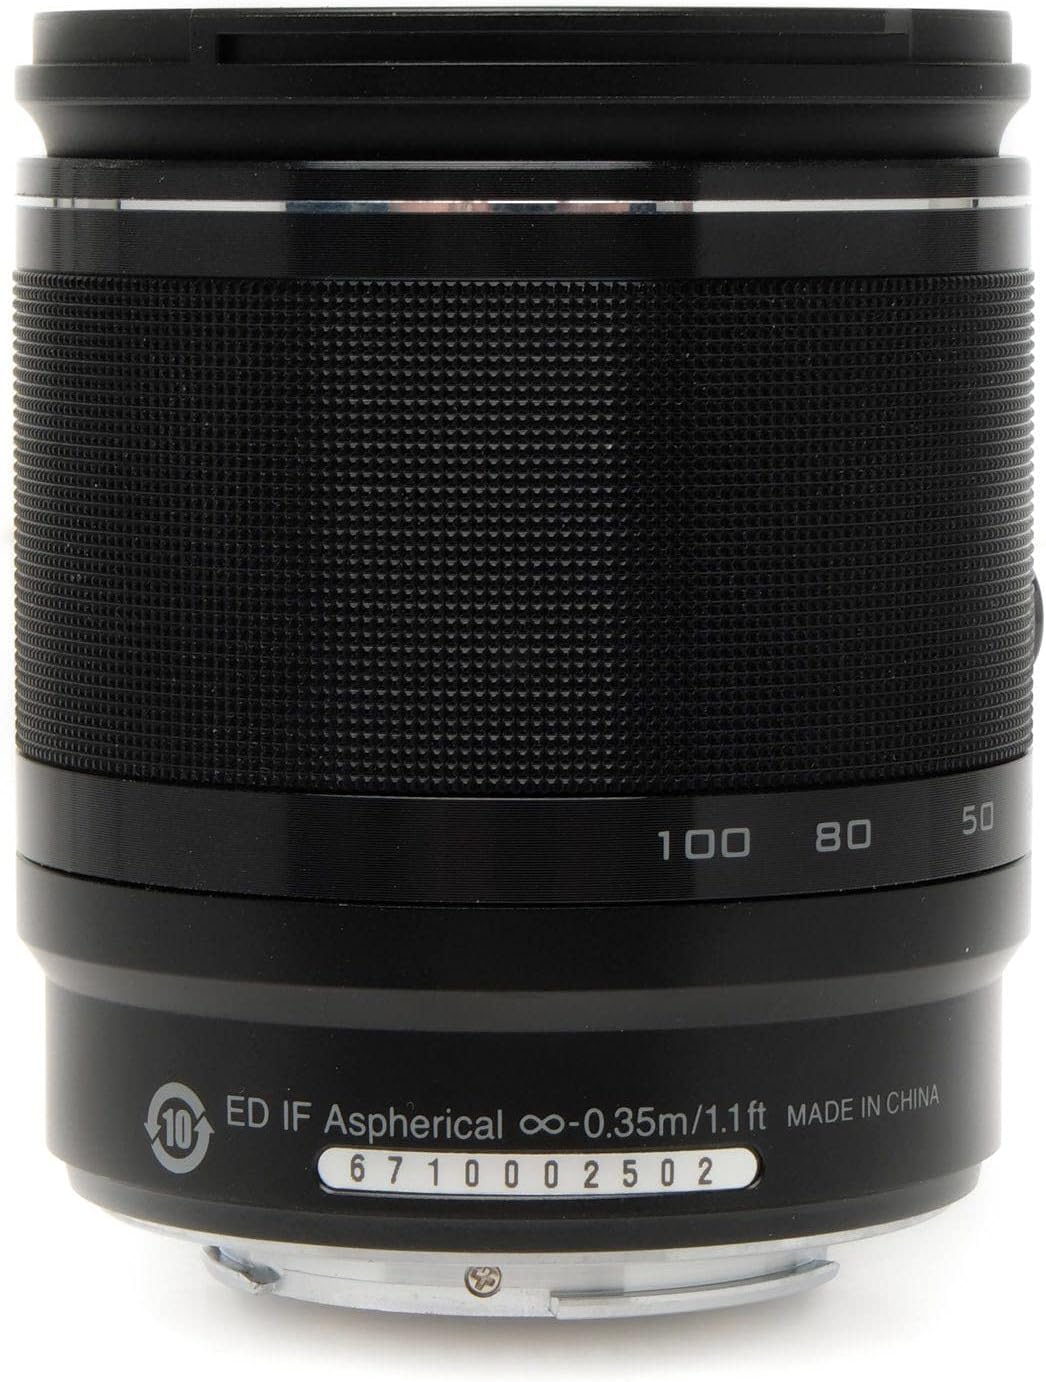 Ống kính Nikon 1 NIKKOR 10-100mm f/4.0-5.6 VR (Black)